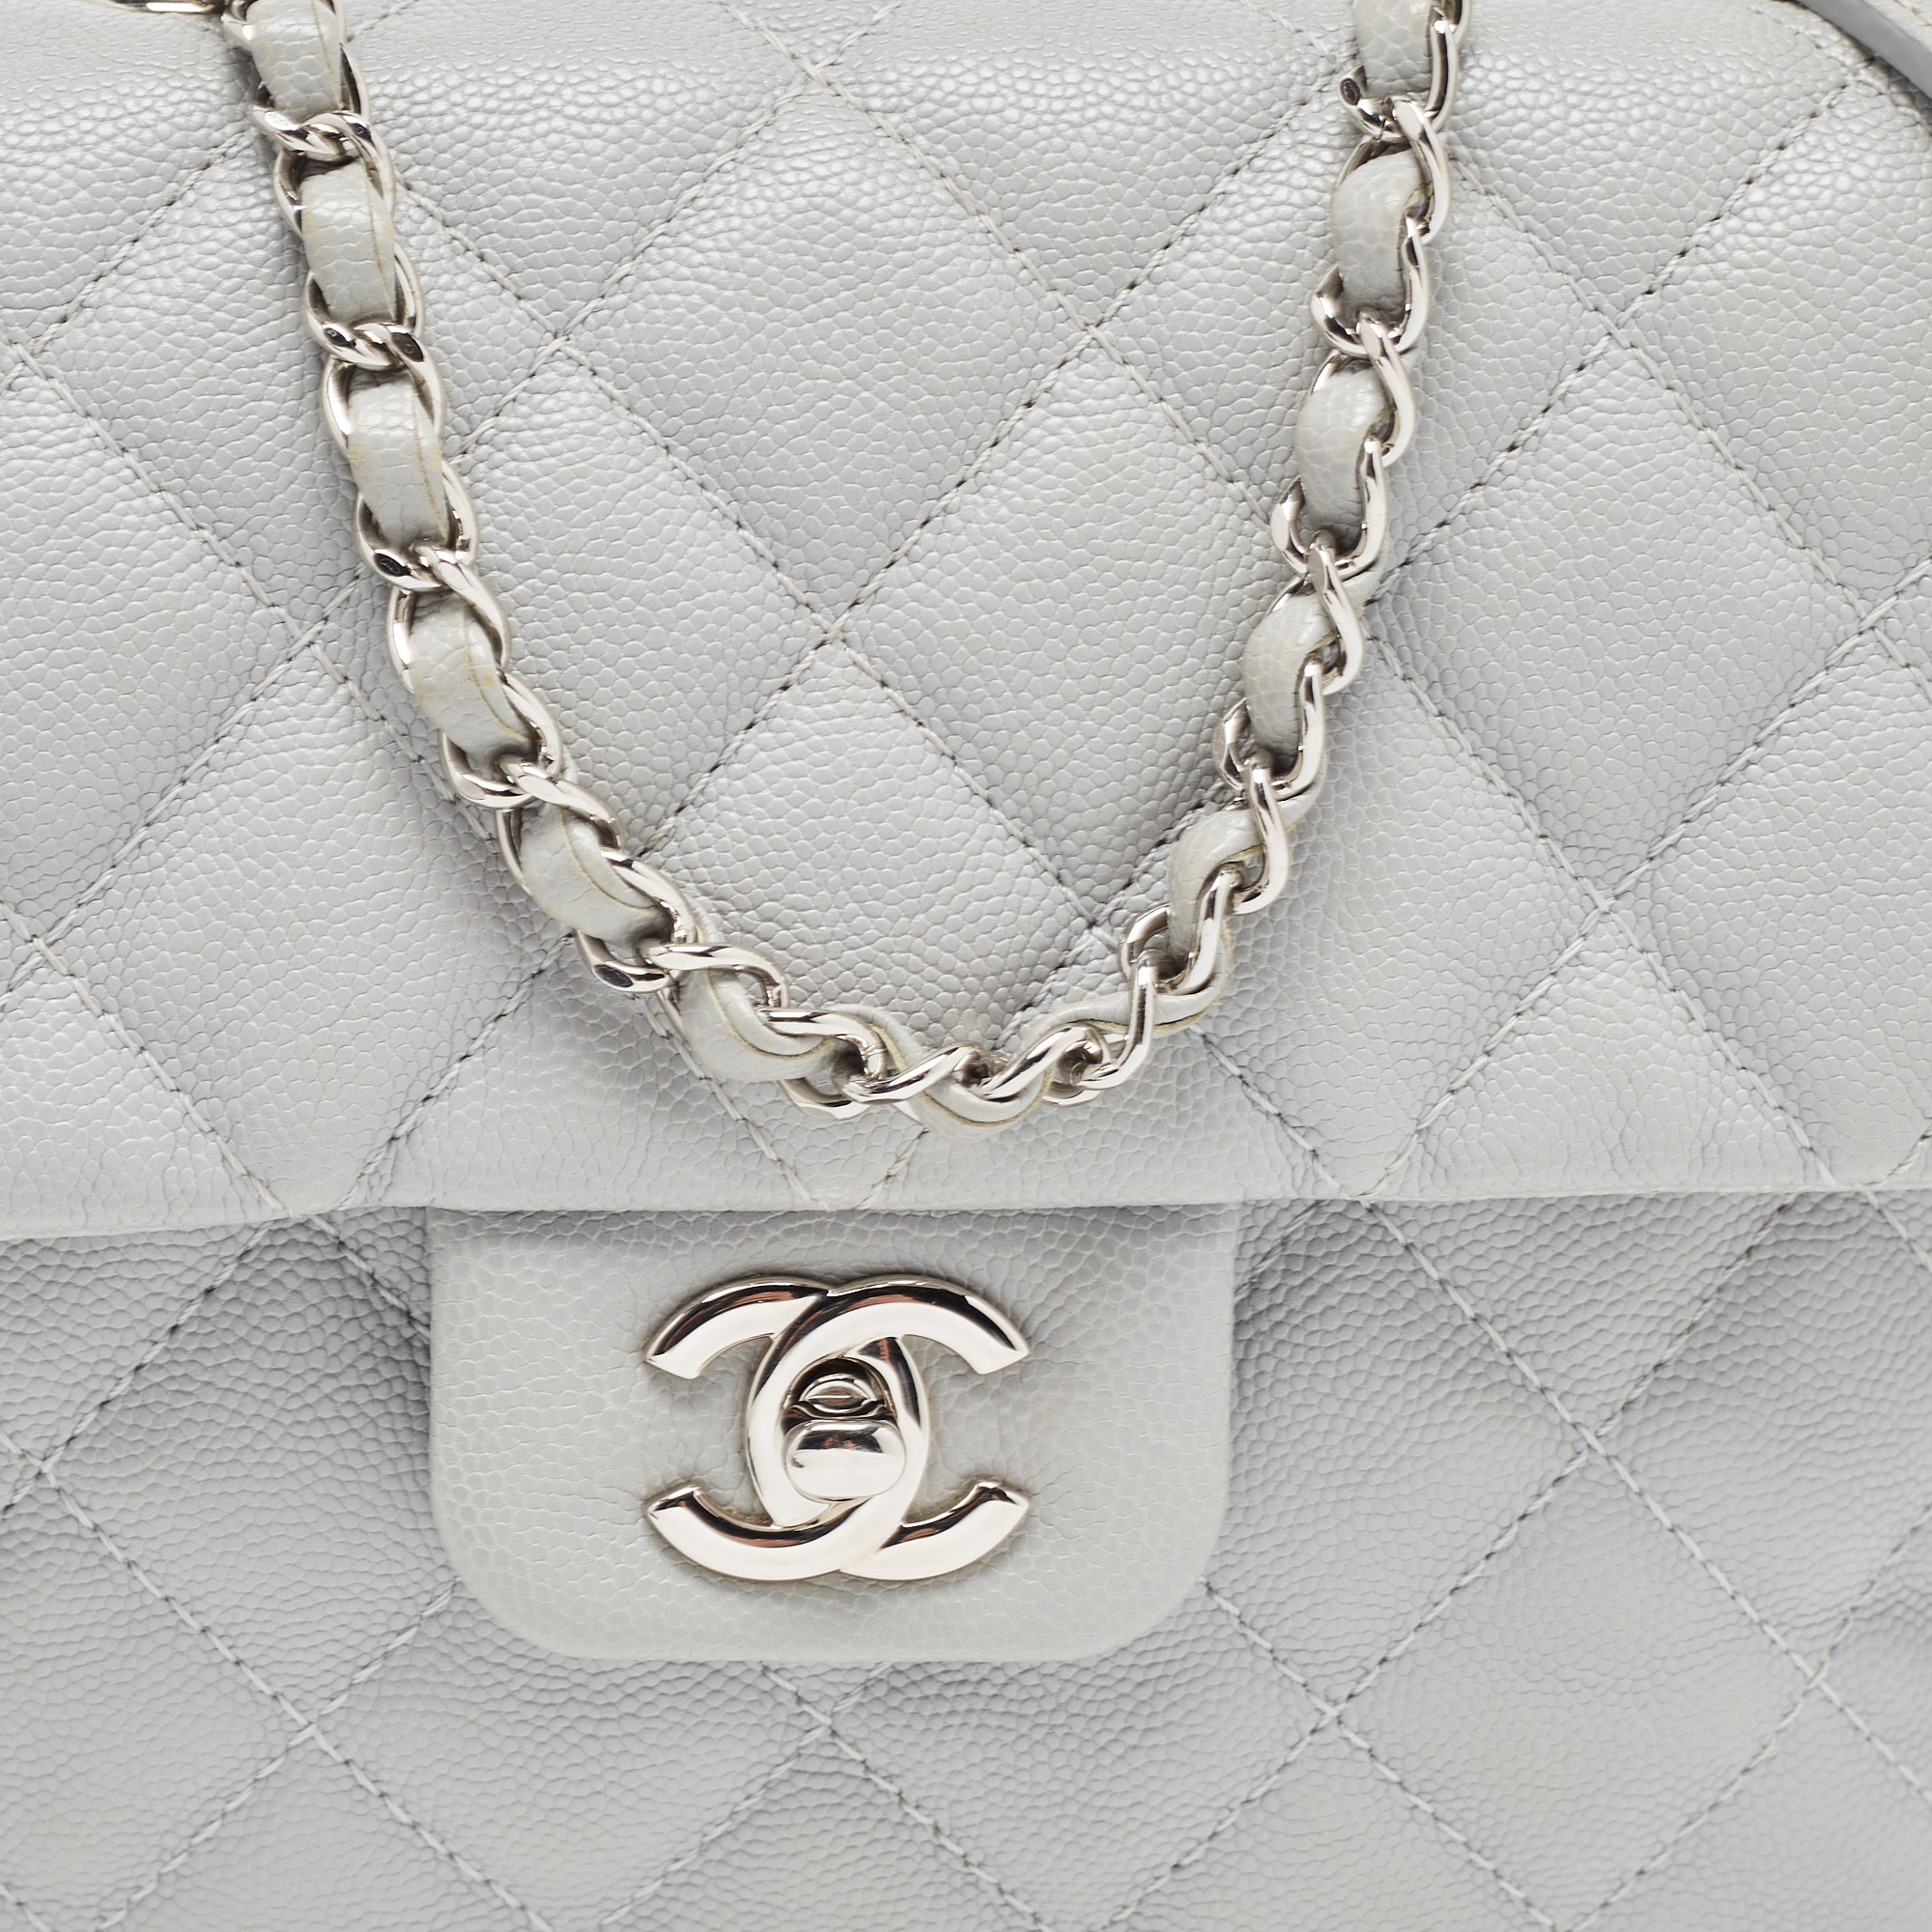 Chanel Grey Caviar Leather Medium Urban Companion Flap Bag